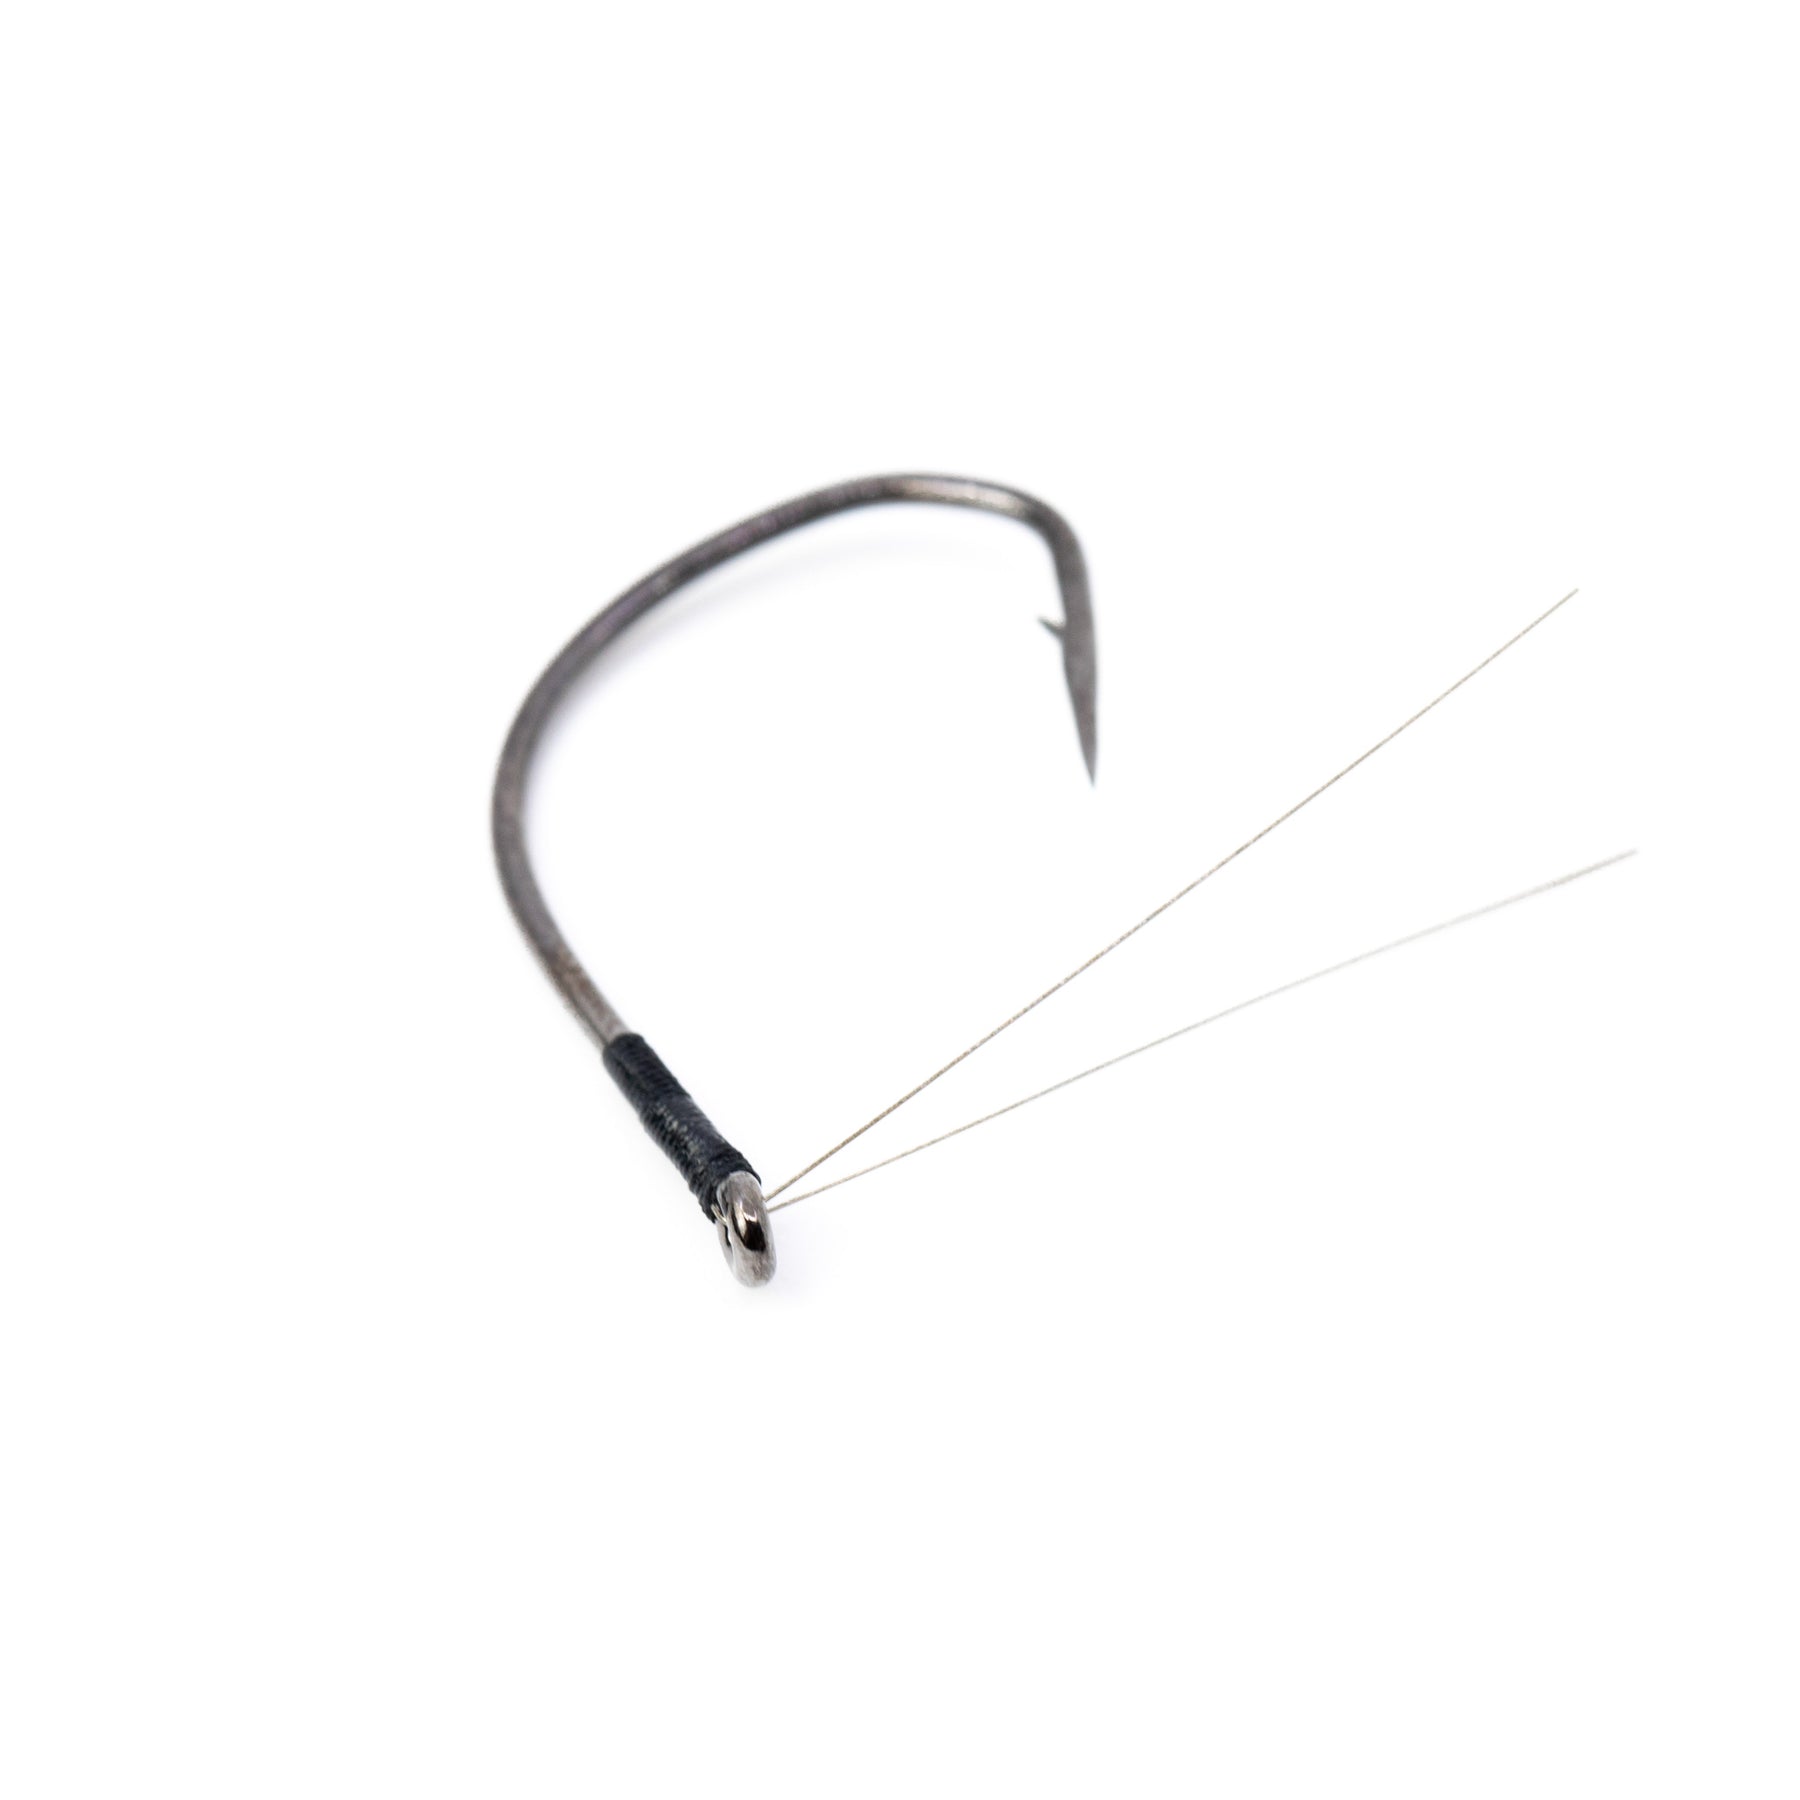 FINESSE WIDE GAP medium guage lazer sharp weedless hooks (Bass Fishing –  Cali Bass Baits